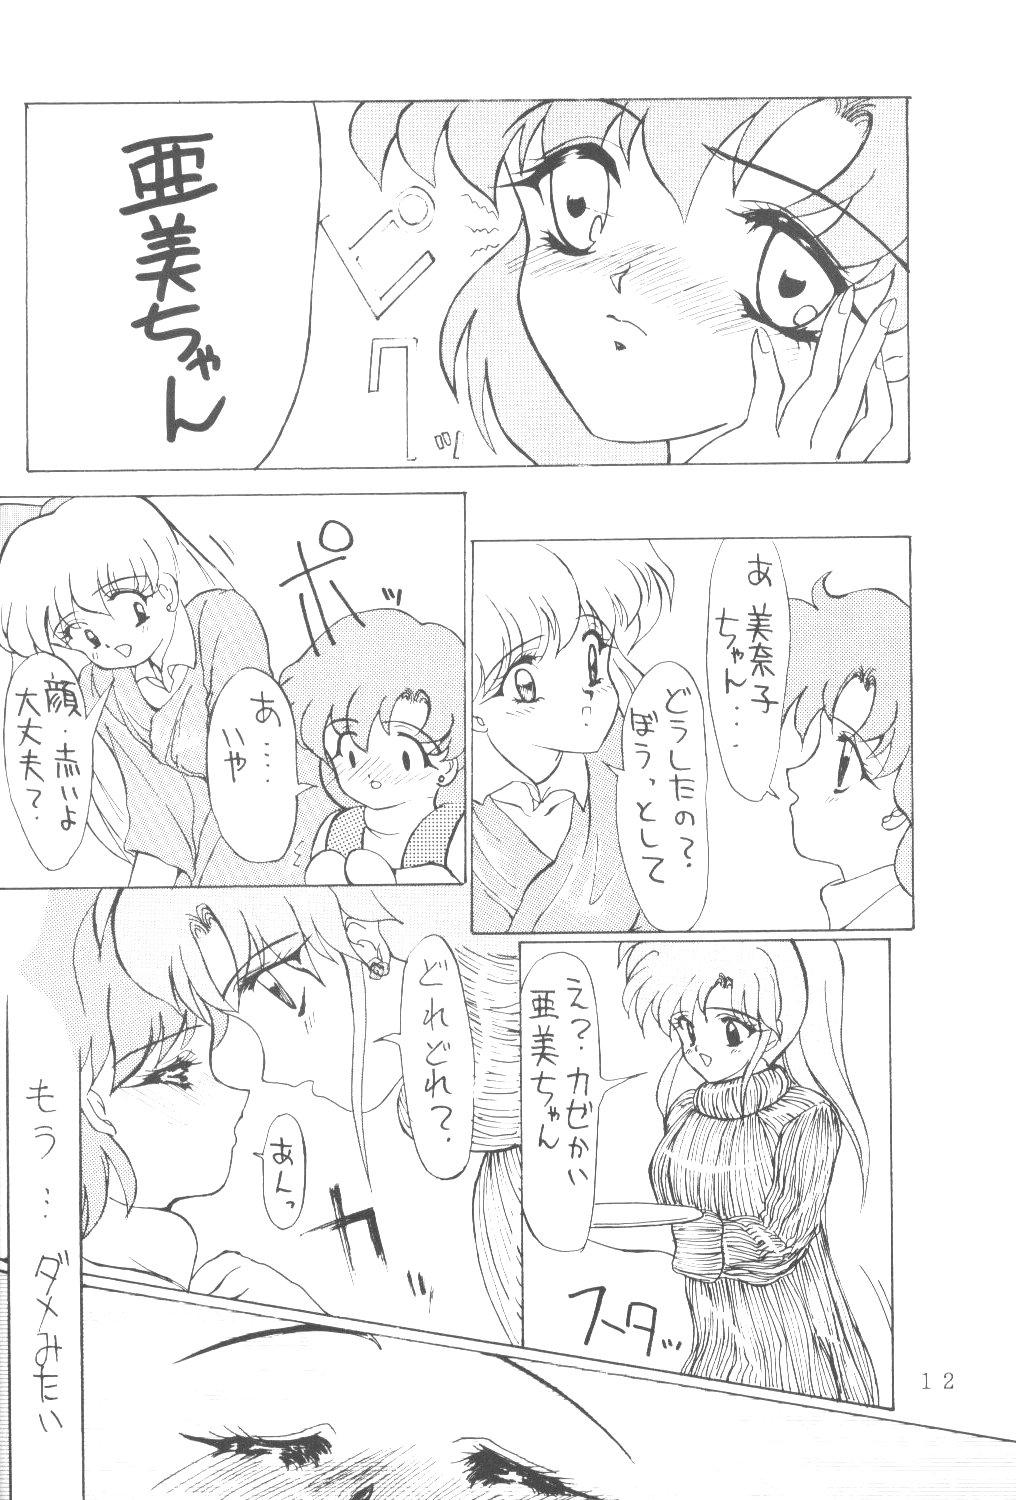 Ex Girlfriend ALIVE AMI LOST - Sailor moon Male - Page 11